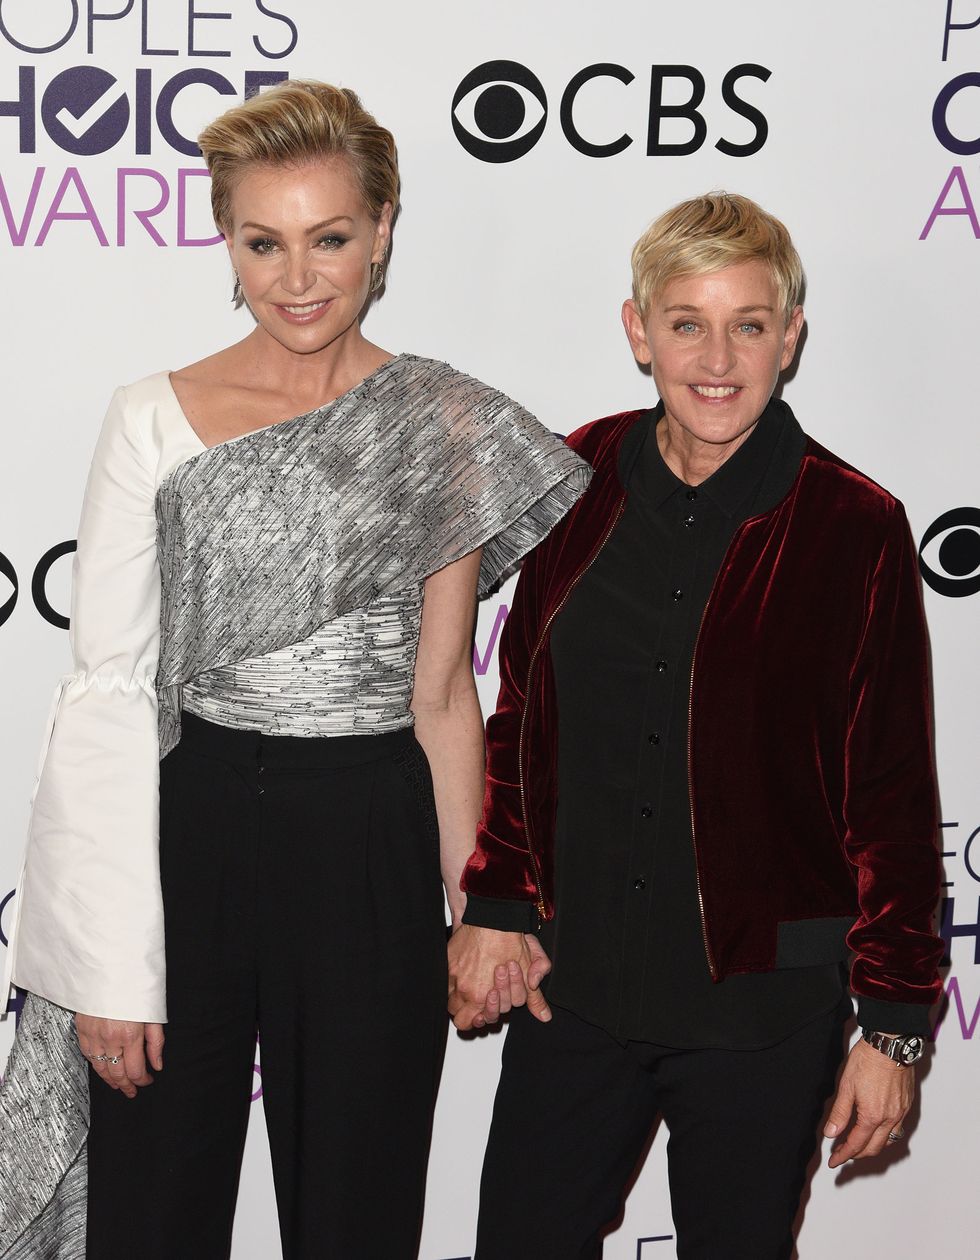 Ellen DeGeneres, Portia de Rossi poses at the People's Choice Awards 2017